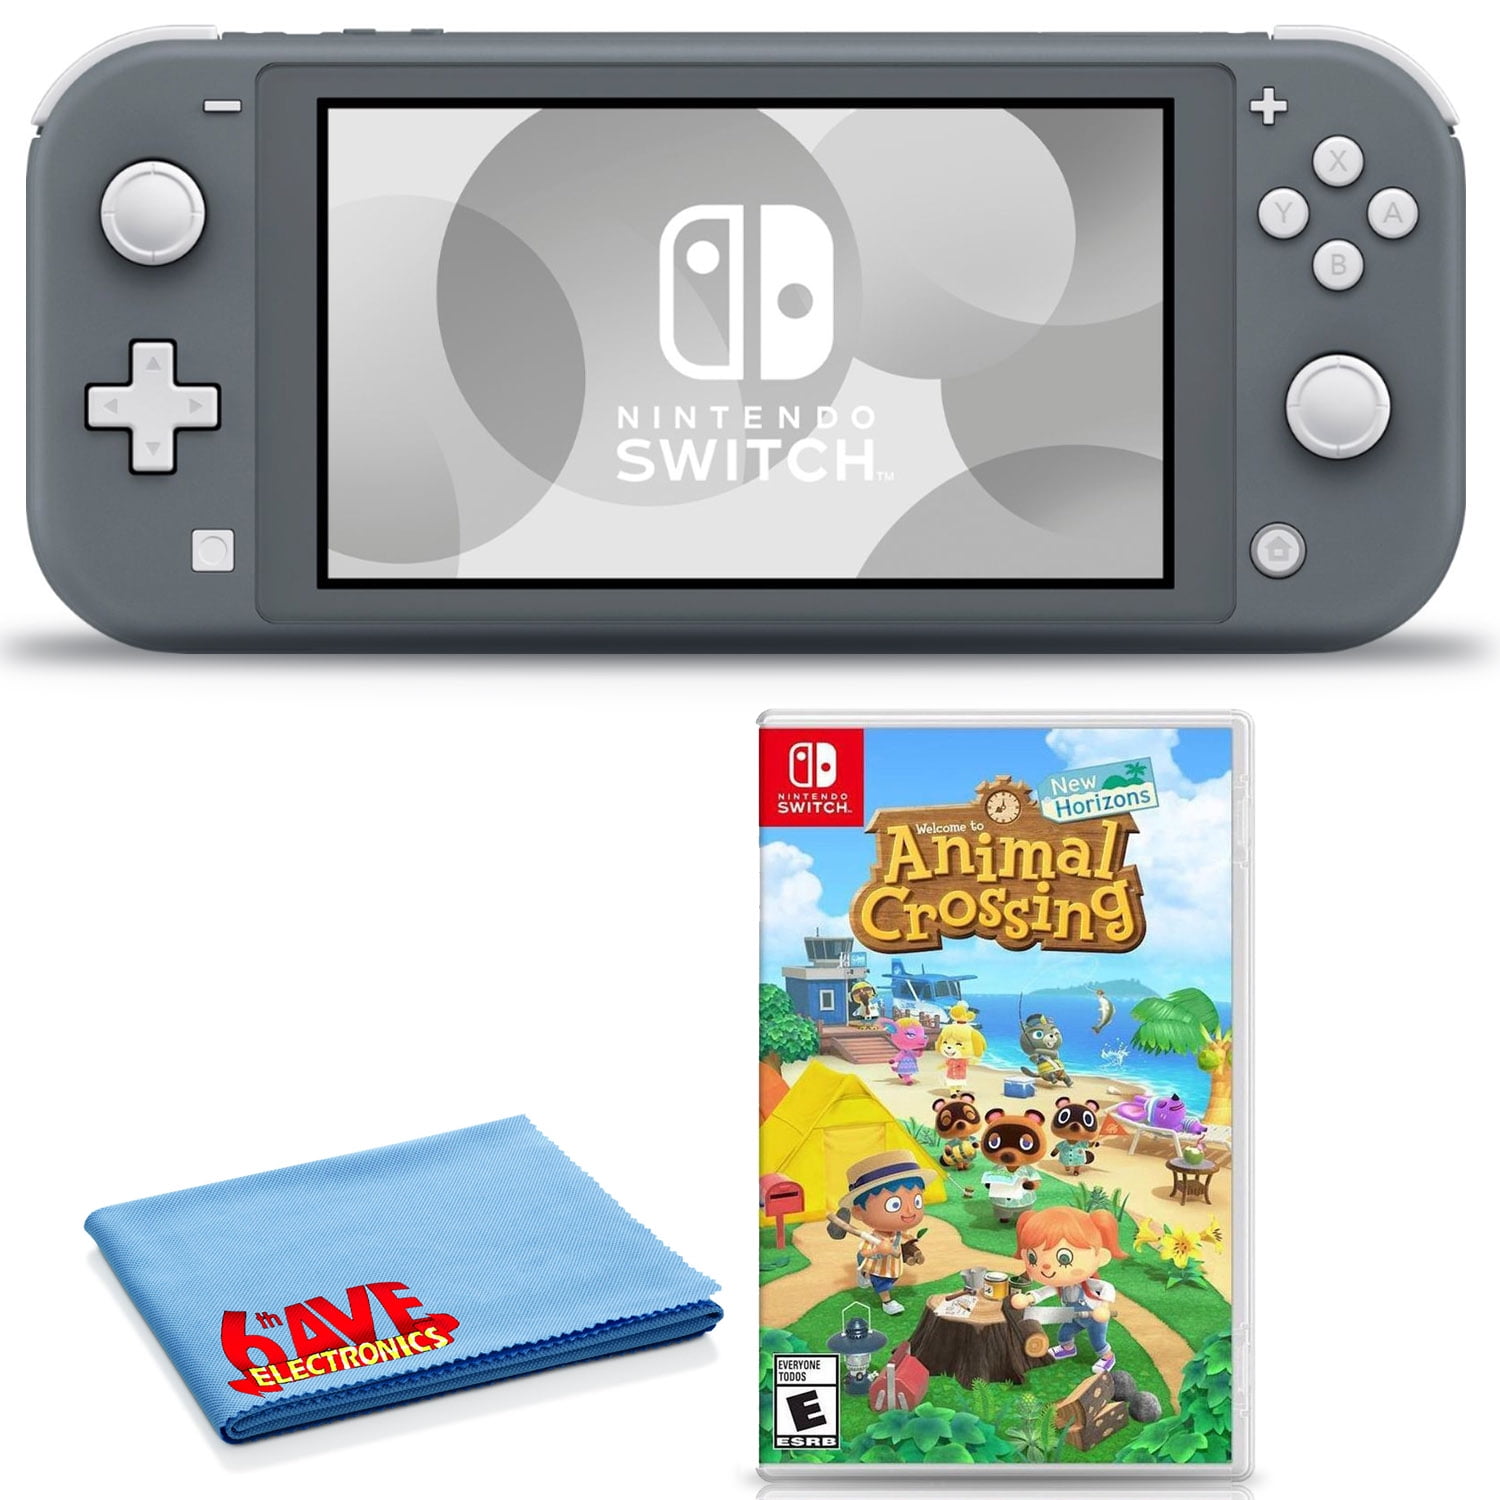 Nintendo Switch Lite (Gray) Bundle Includes Animal Crossing: New